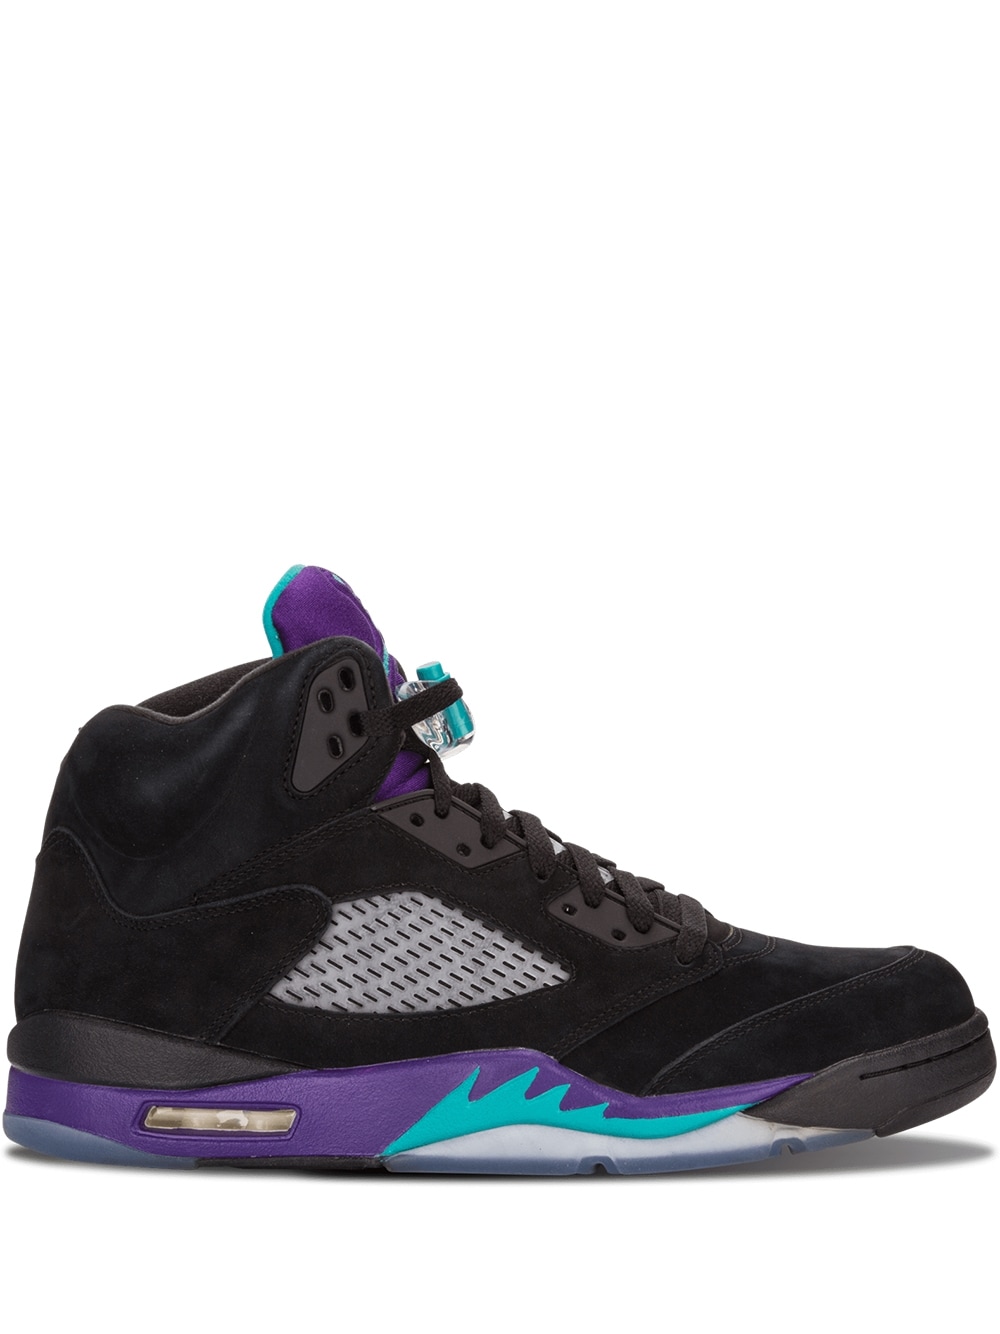 Jordan Air Jordan 5 Retro "Black Grape" sneakers